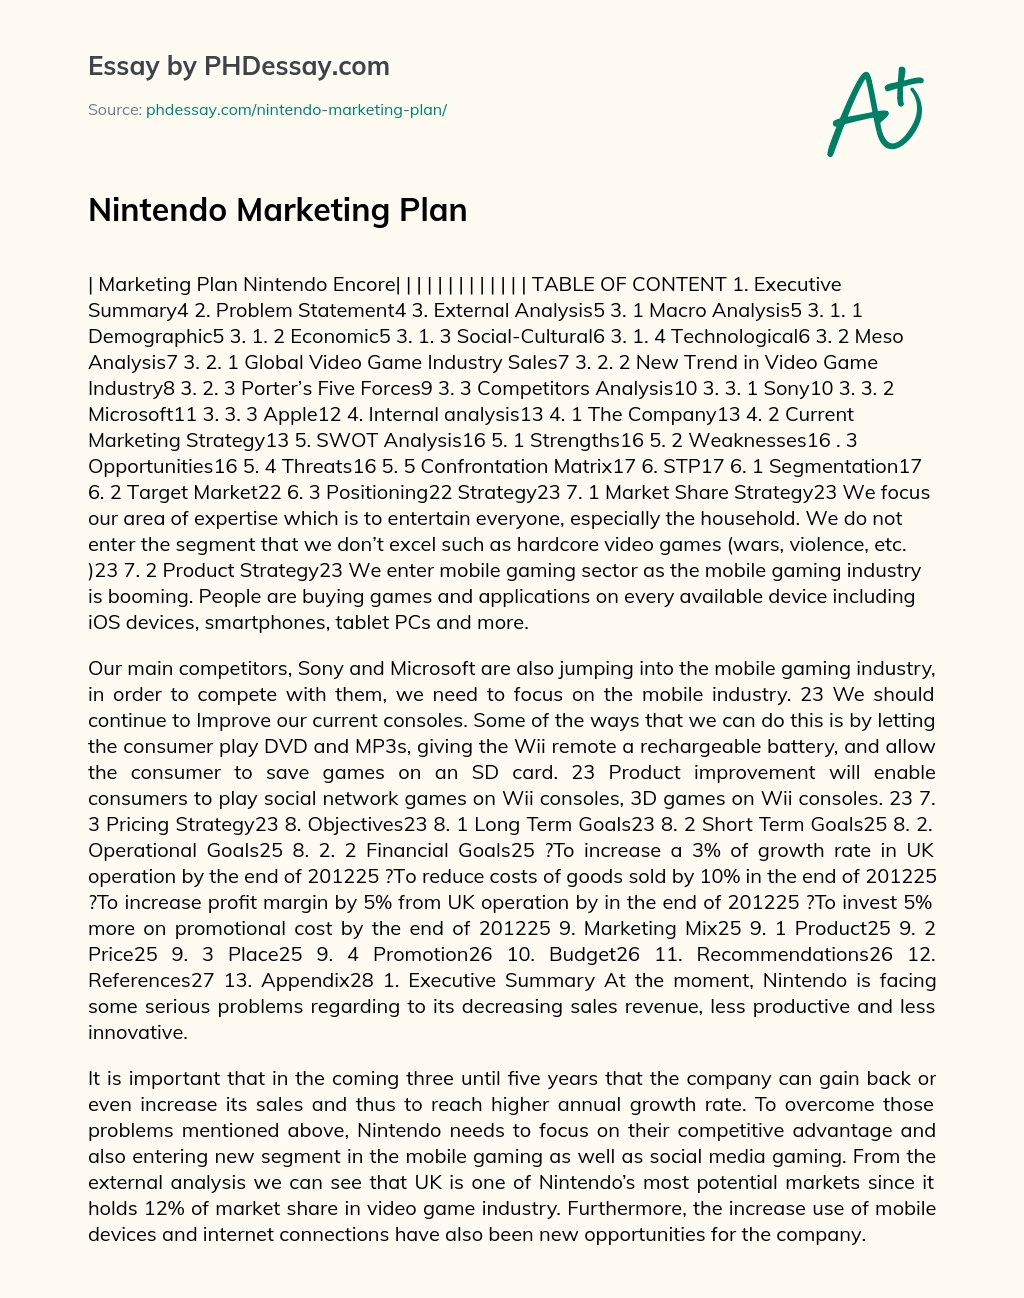 Nintendo Marketing Plan essay